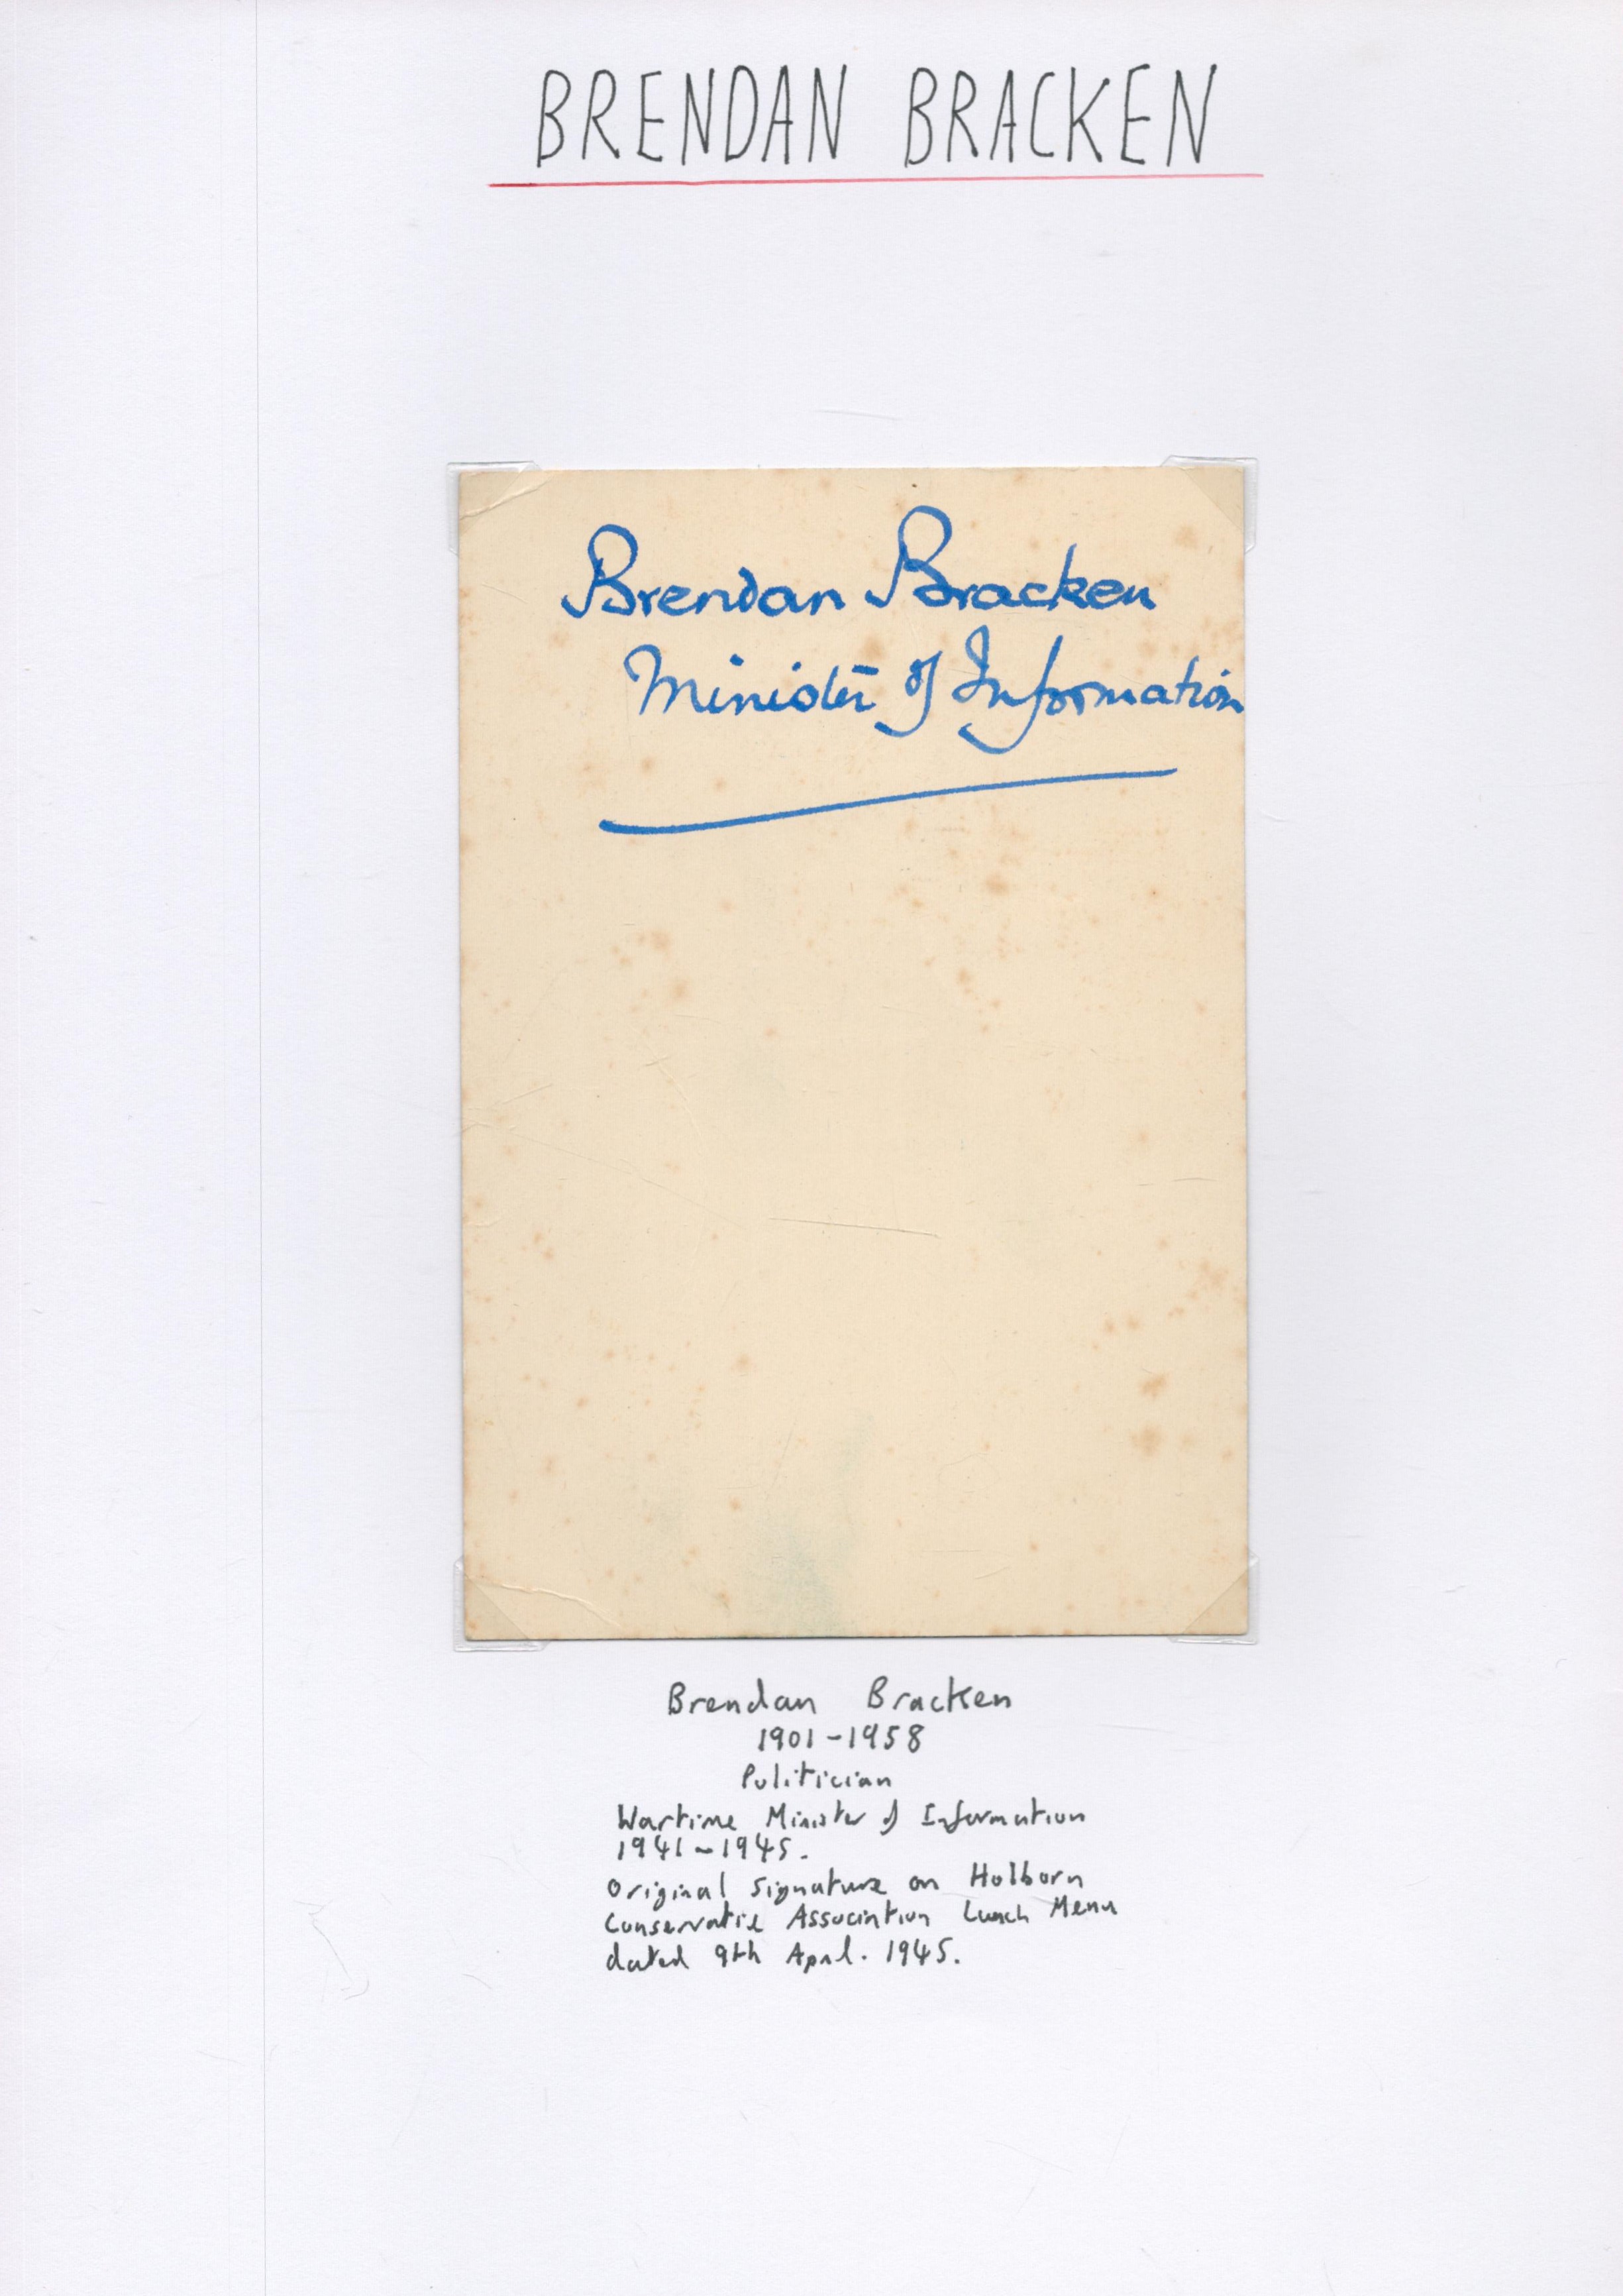 Brendan Rendall Bracken, 1st Viscount Bracken Signed Signature Page. Signed in blue ink. Good